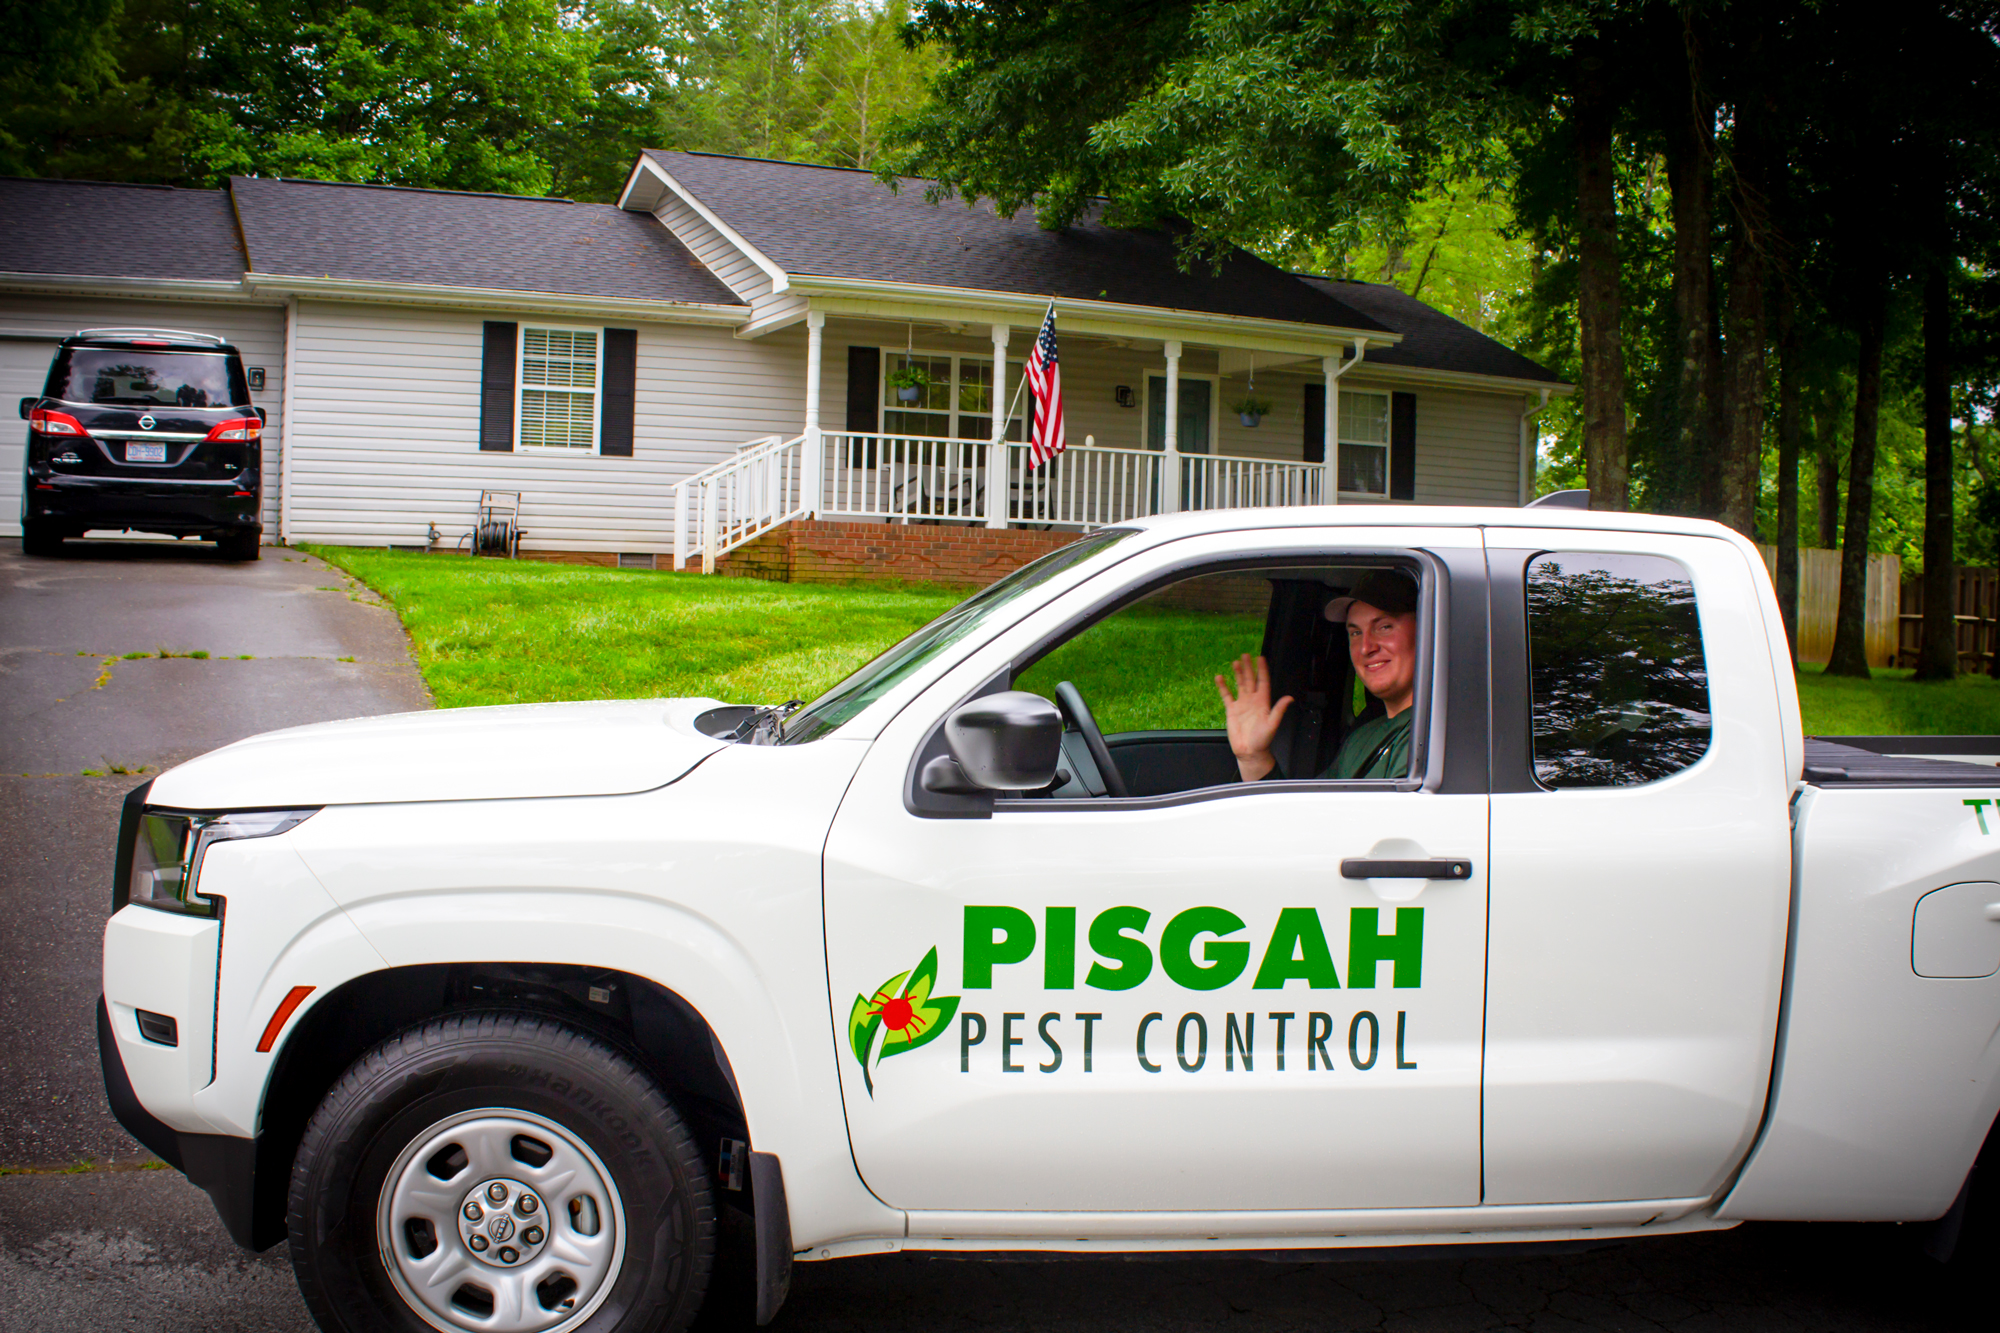 pest control technician waving from truck